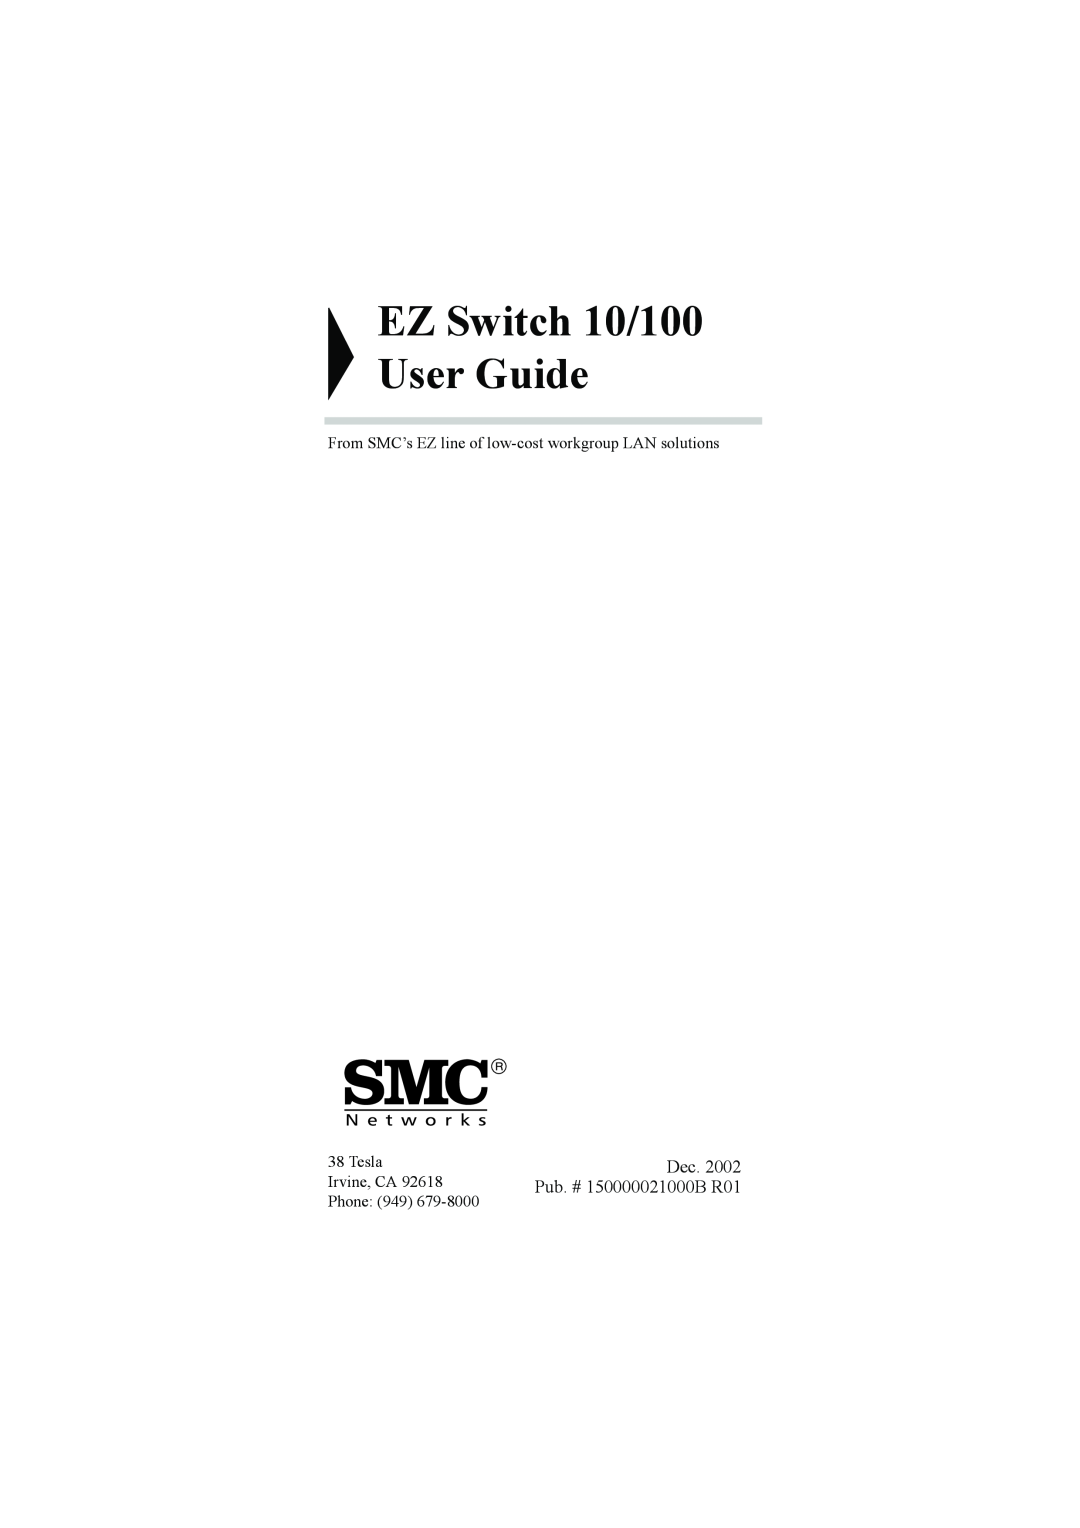 SMC Networks manual EZ Switch 10/100 User Guide, Pub. # 150000021000B R01, Tesla, Irvine, CA, Phone 949 